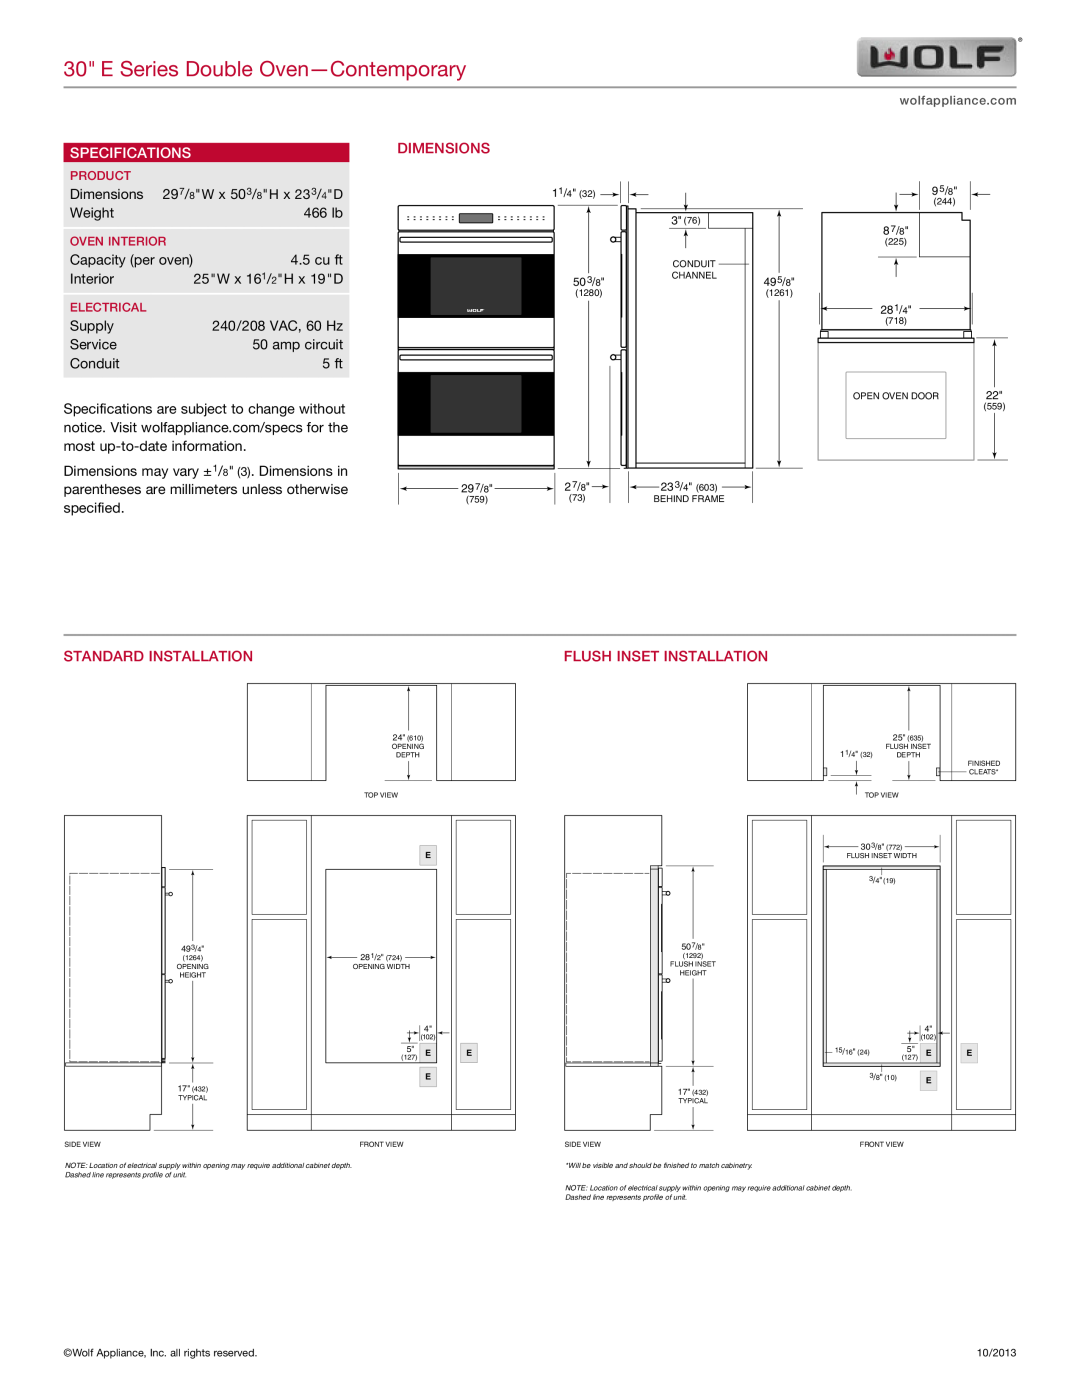 Sub-Zero DO30CE/B/TH manual Specifications, Dimensions, STANDARD Installation, FLUSH INSET Installation 